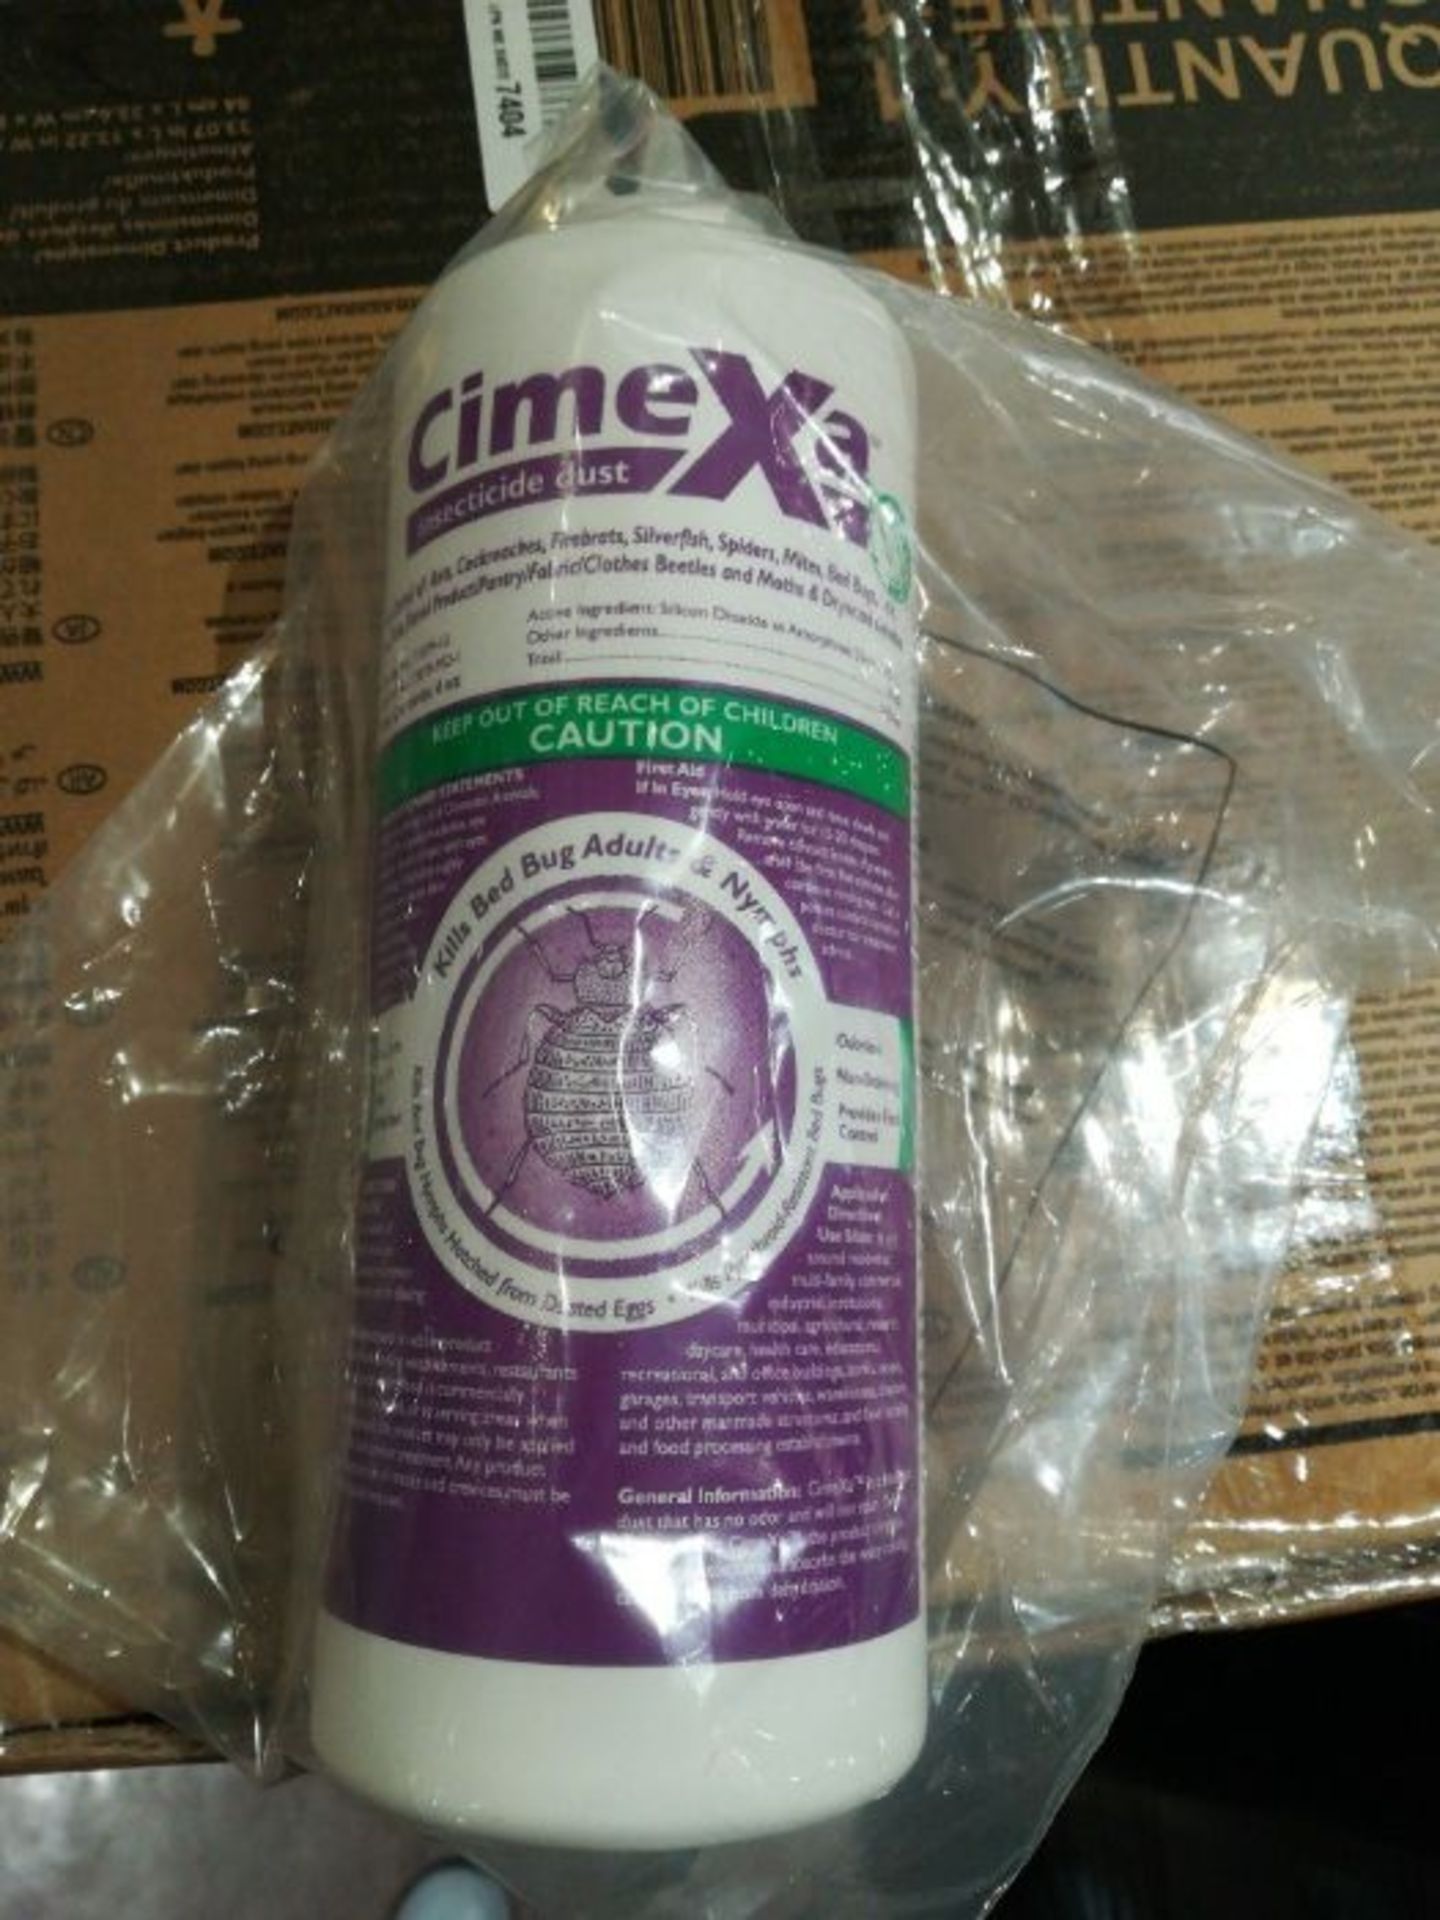 ROCKWELL CimeXa Insecticide Dust 4 oz - Image 2 of 2